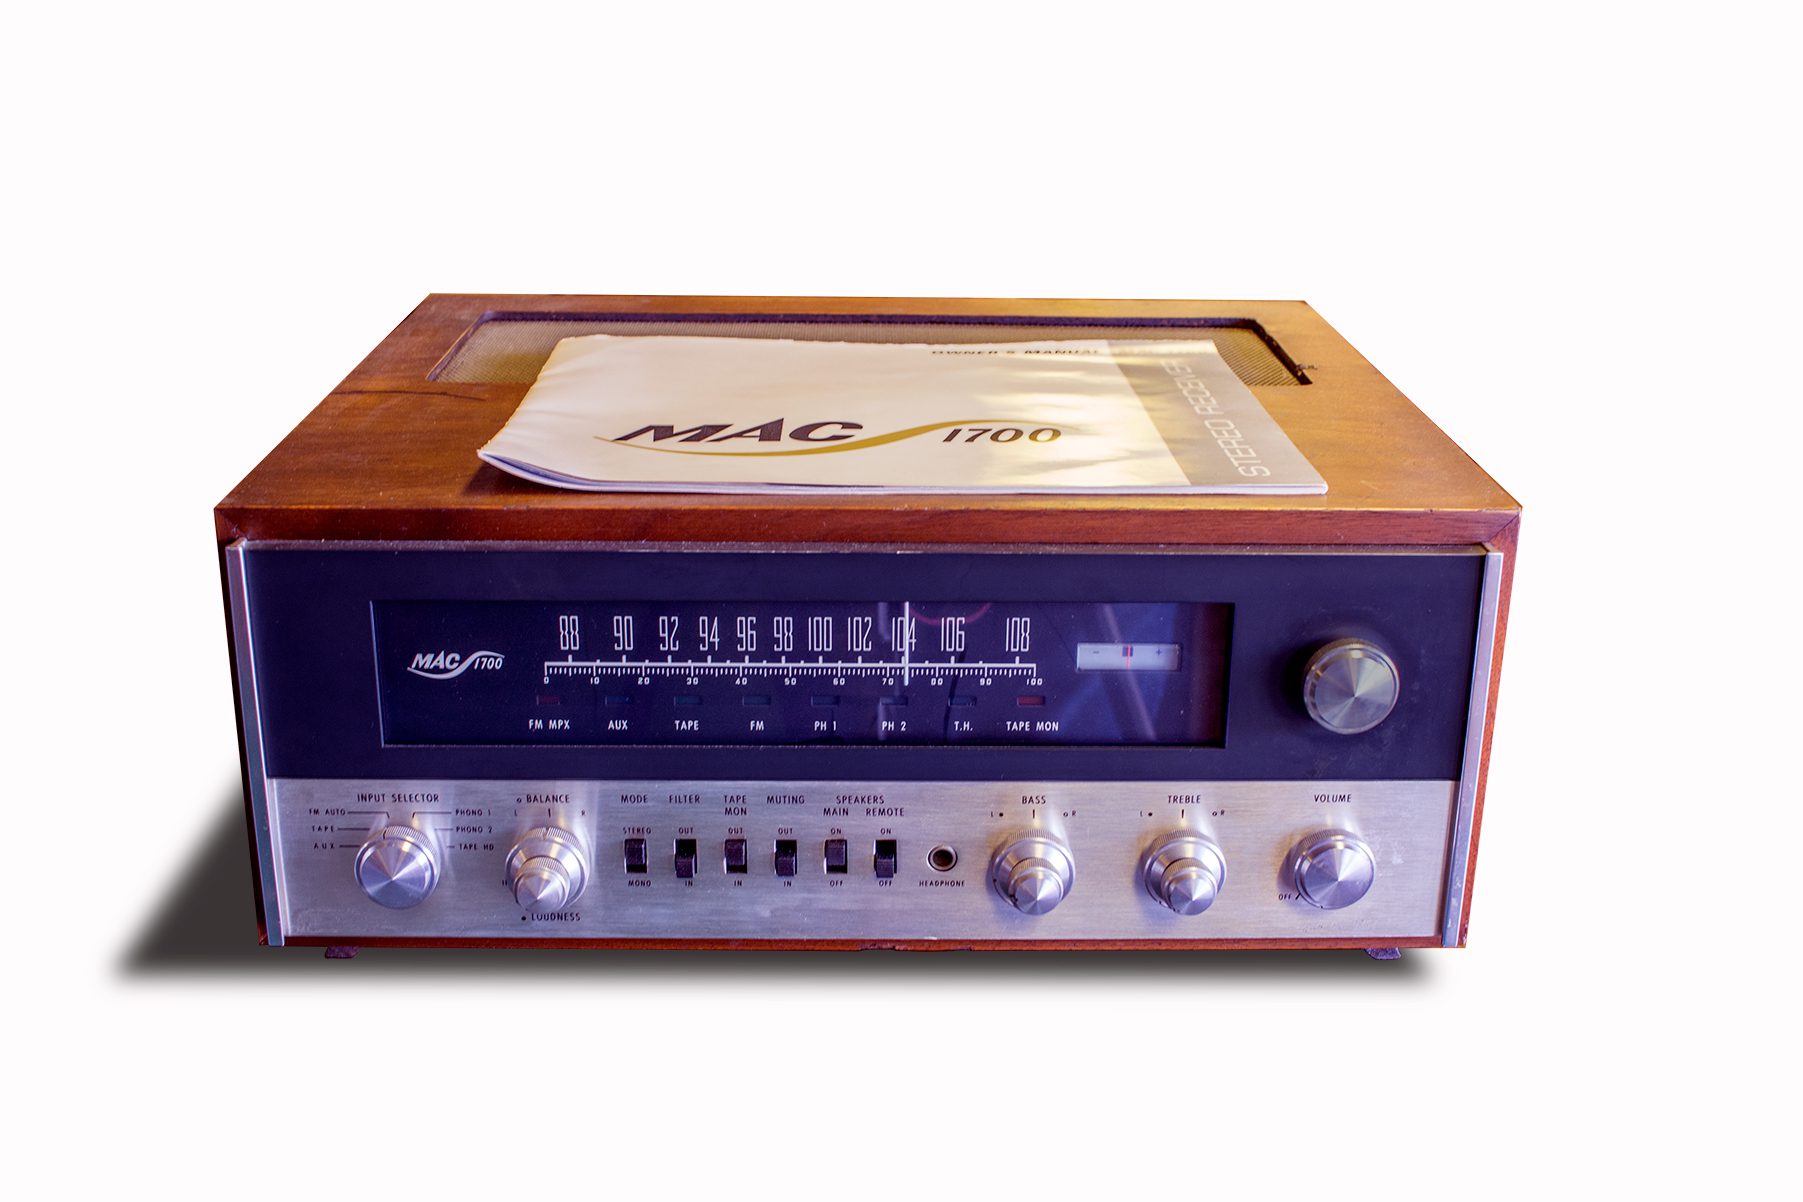 Don Jones Custom Stereo -McIntosh 1700 Receiver